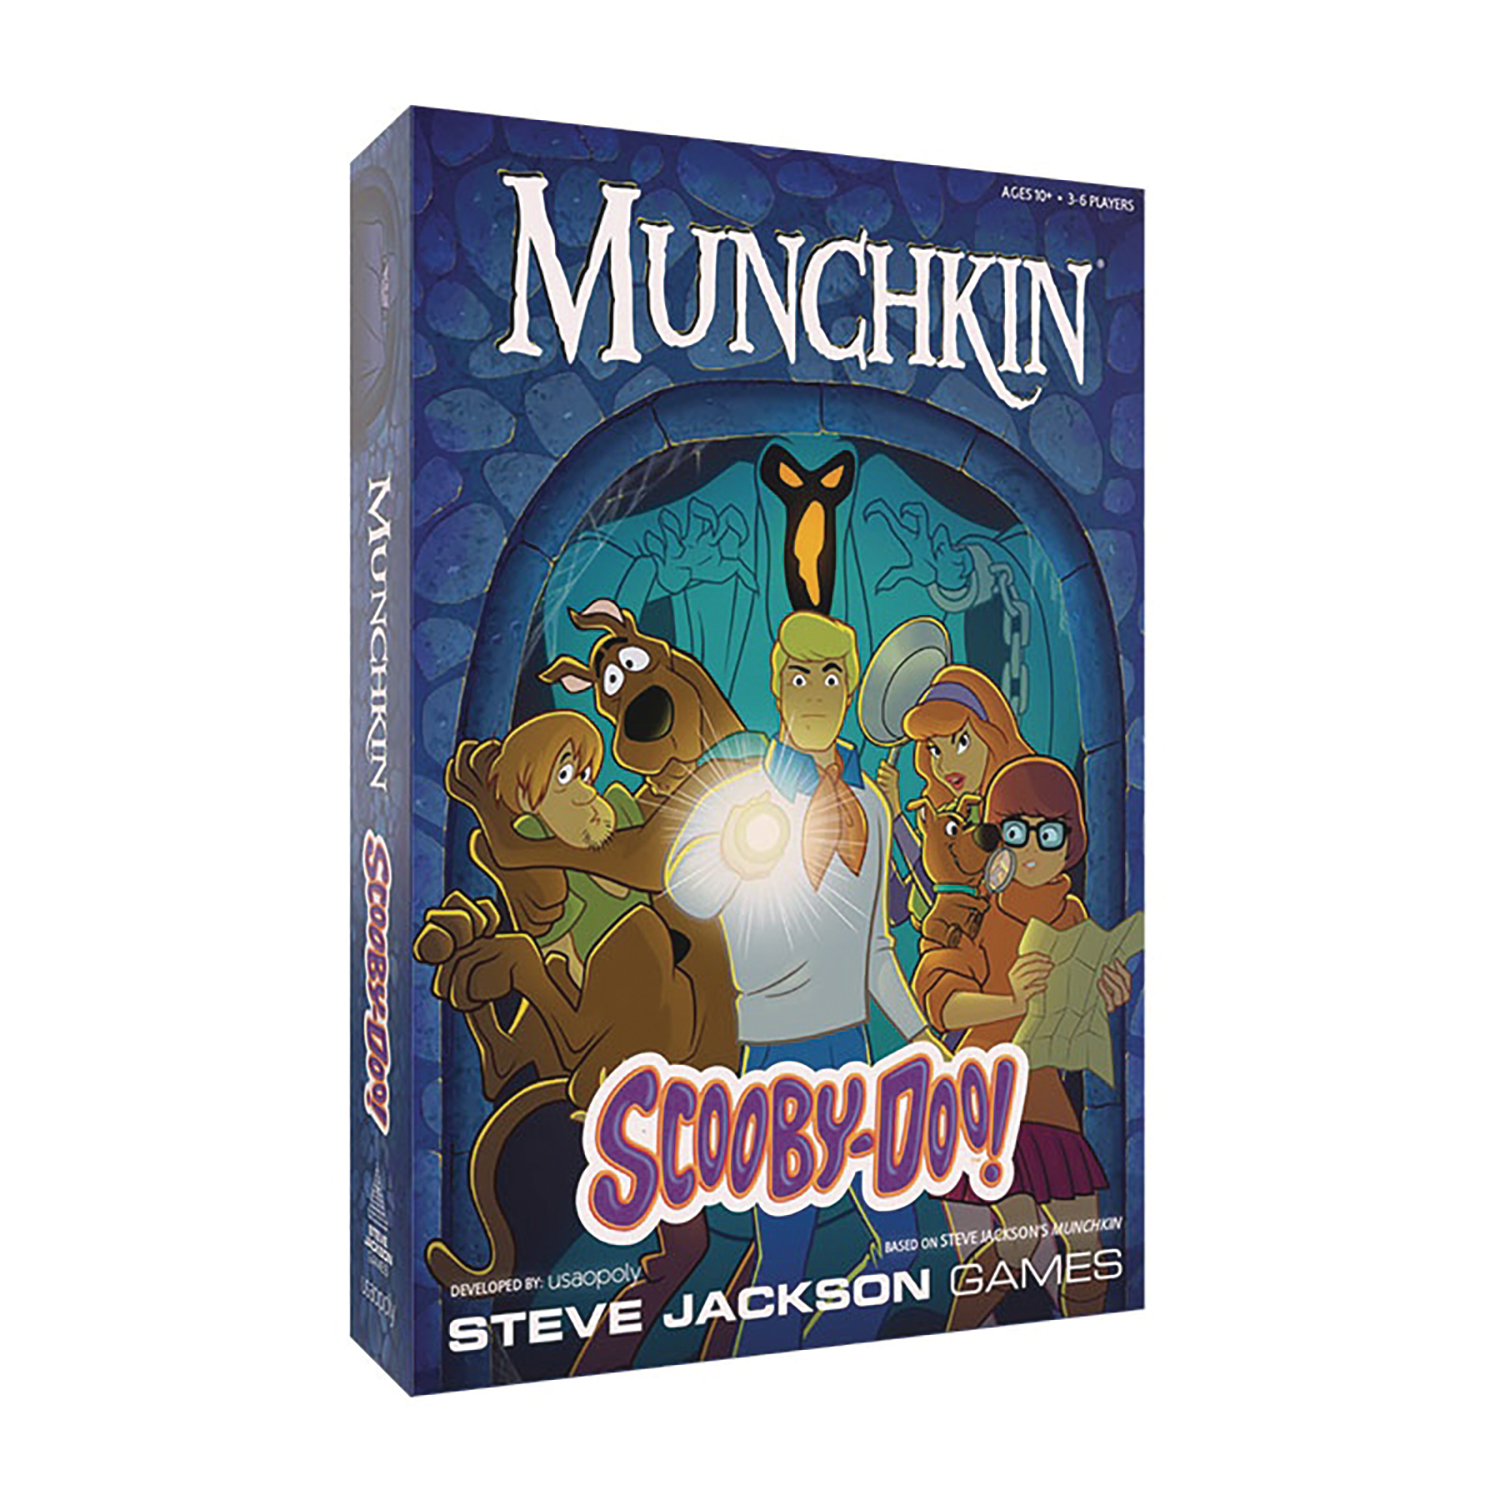 Munchkin: Scooby-Doo Card Game